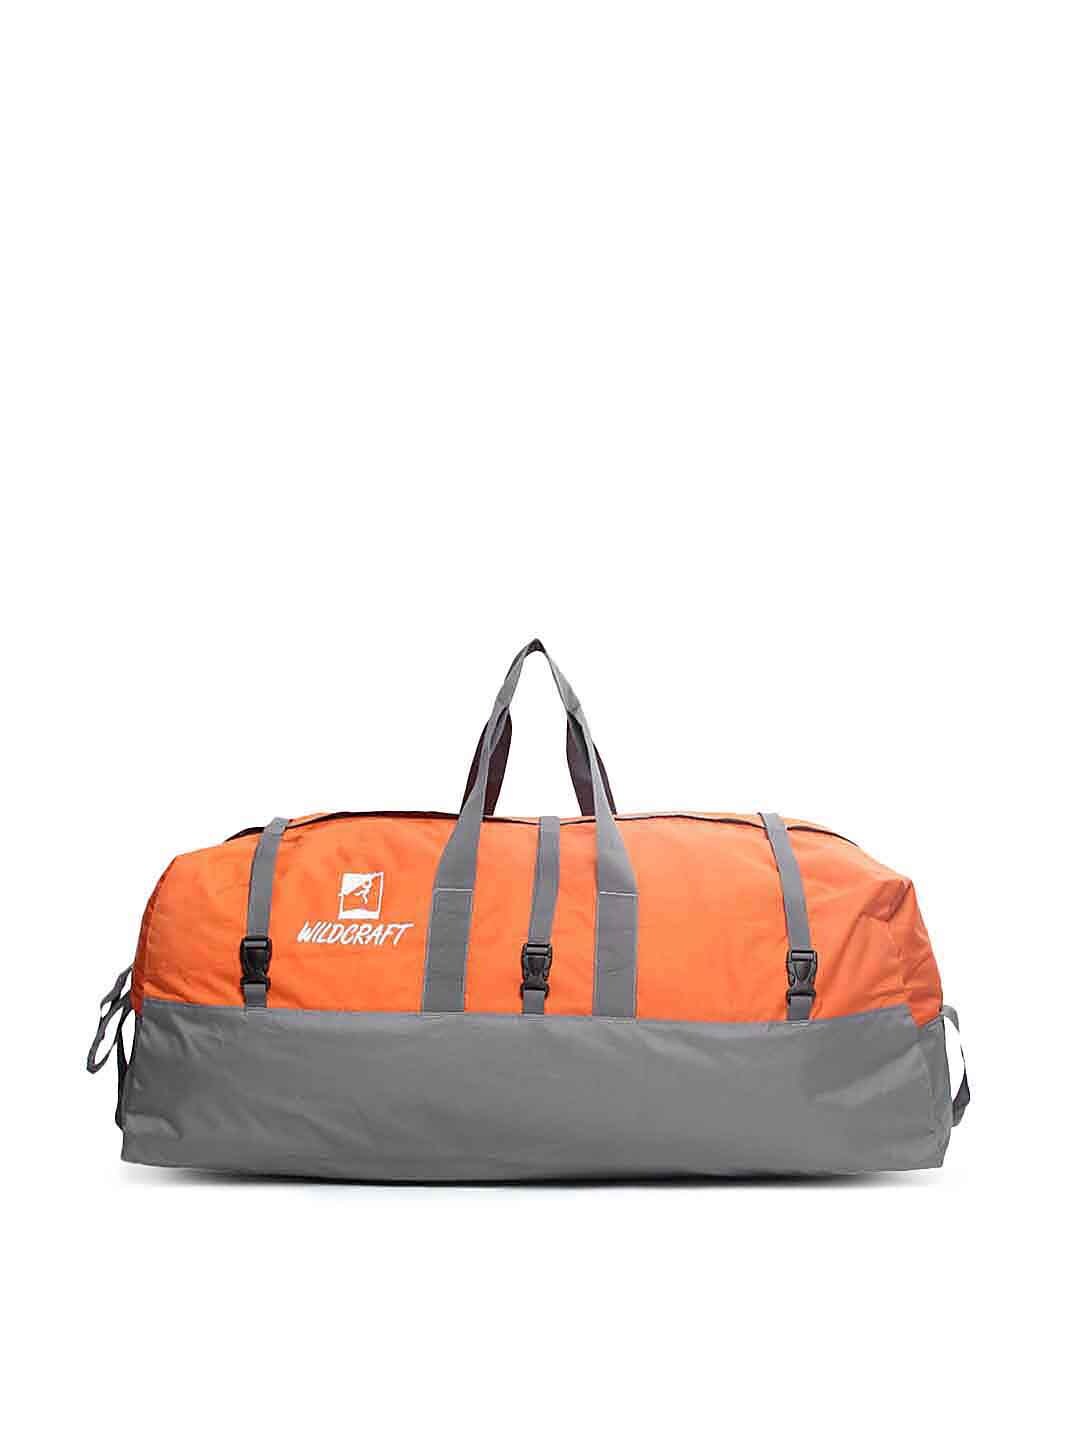 Wildcraft Unisex Orange & Grey Oversized Duffel Bag